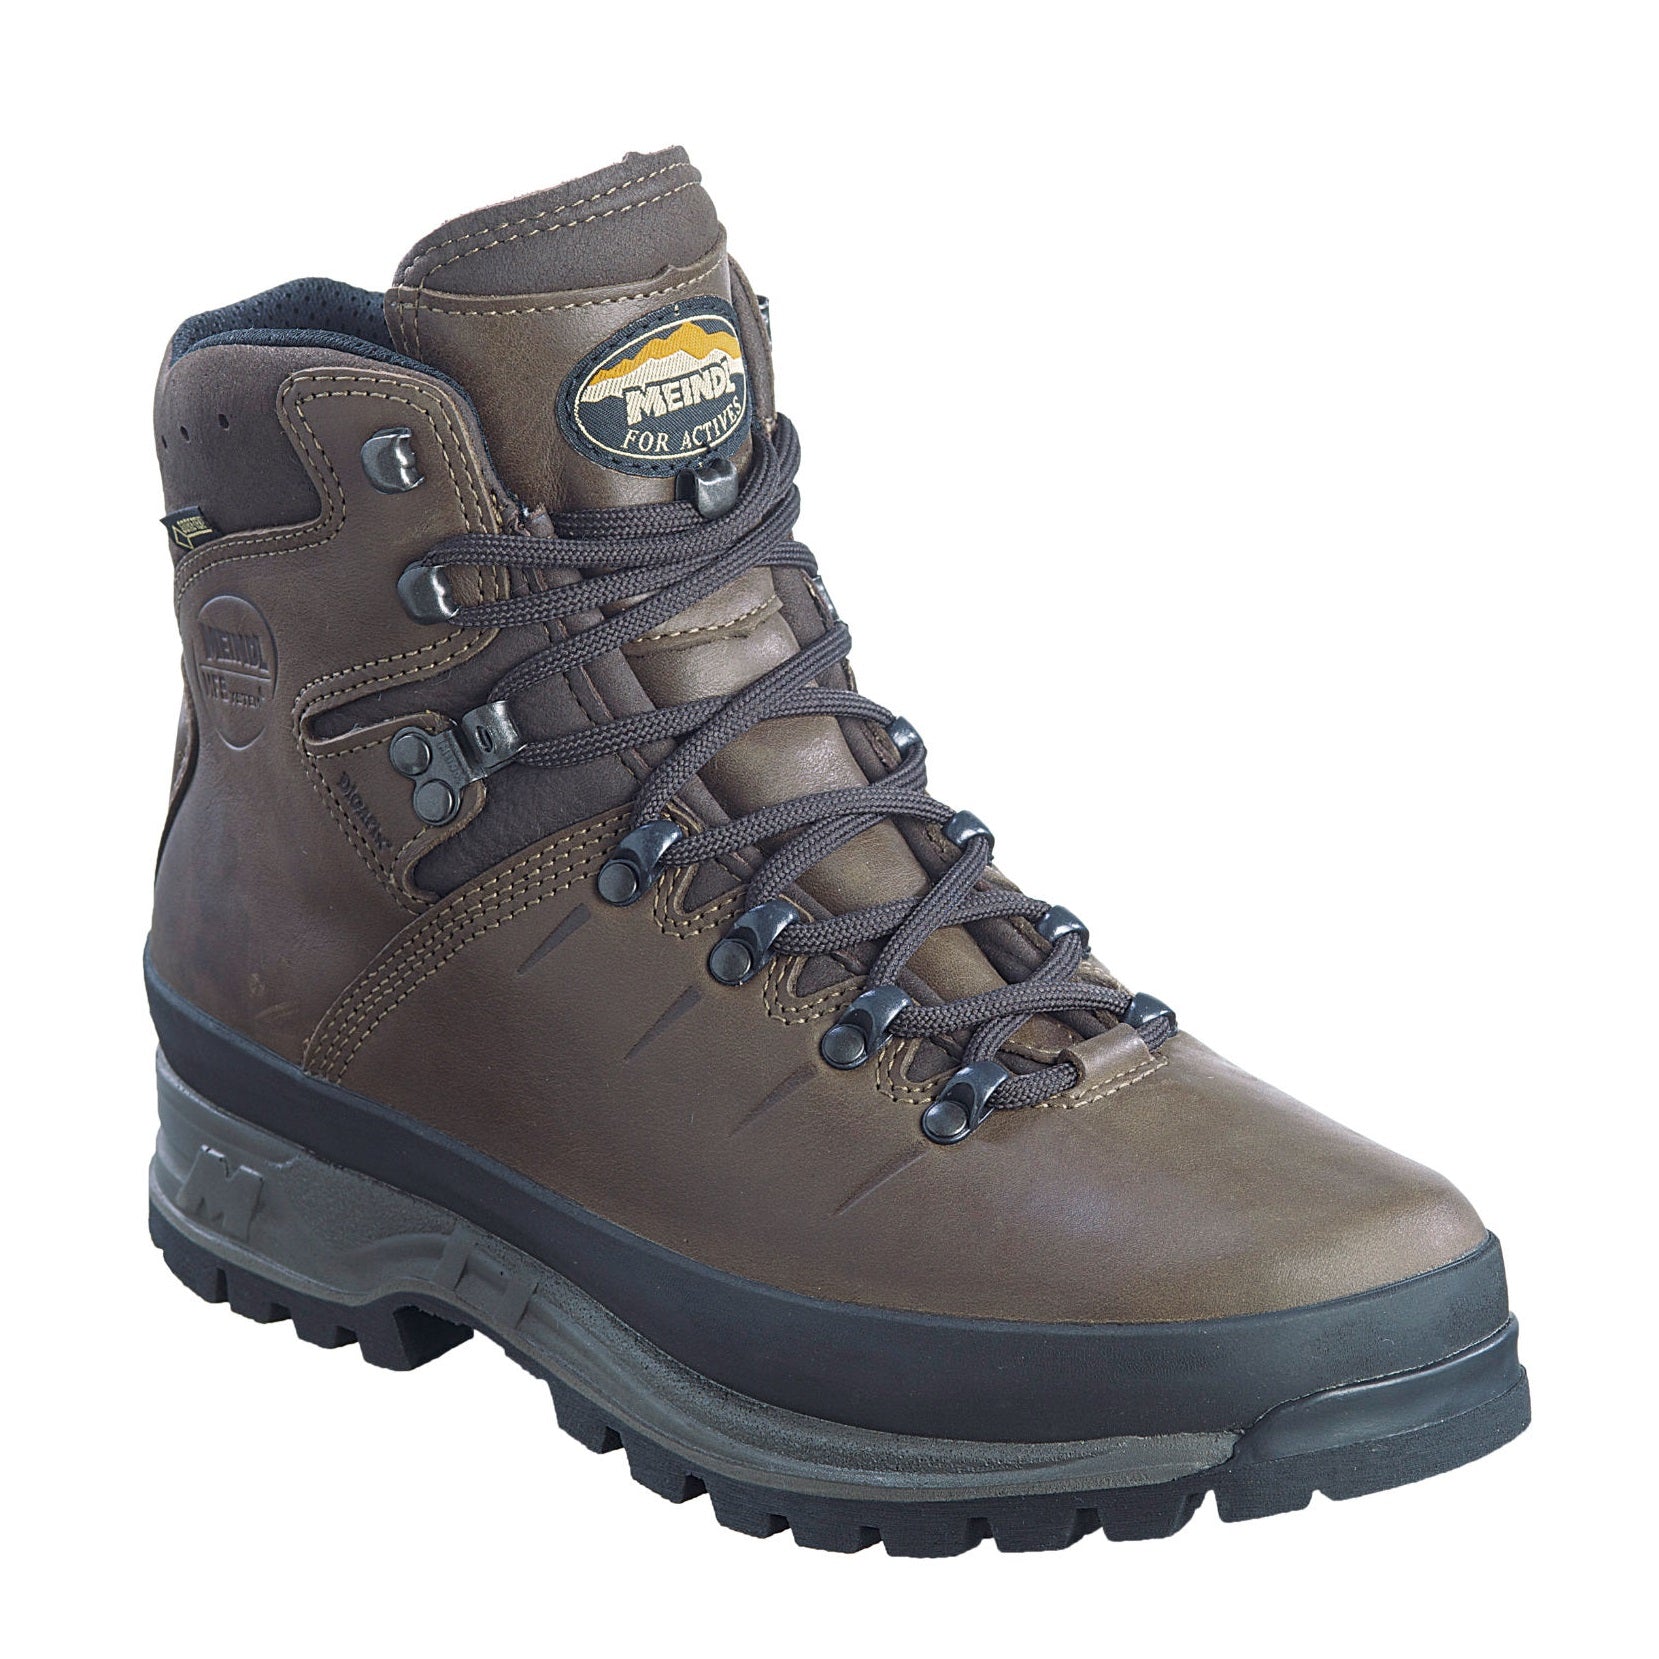 40% off - MEINDL Bhutan MFS Gore-Tex Walking Boots - Mens - Dark Brown - Size: UK 7